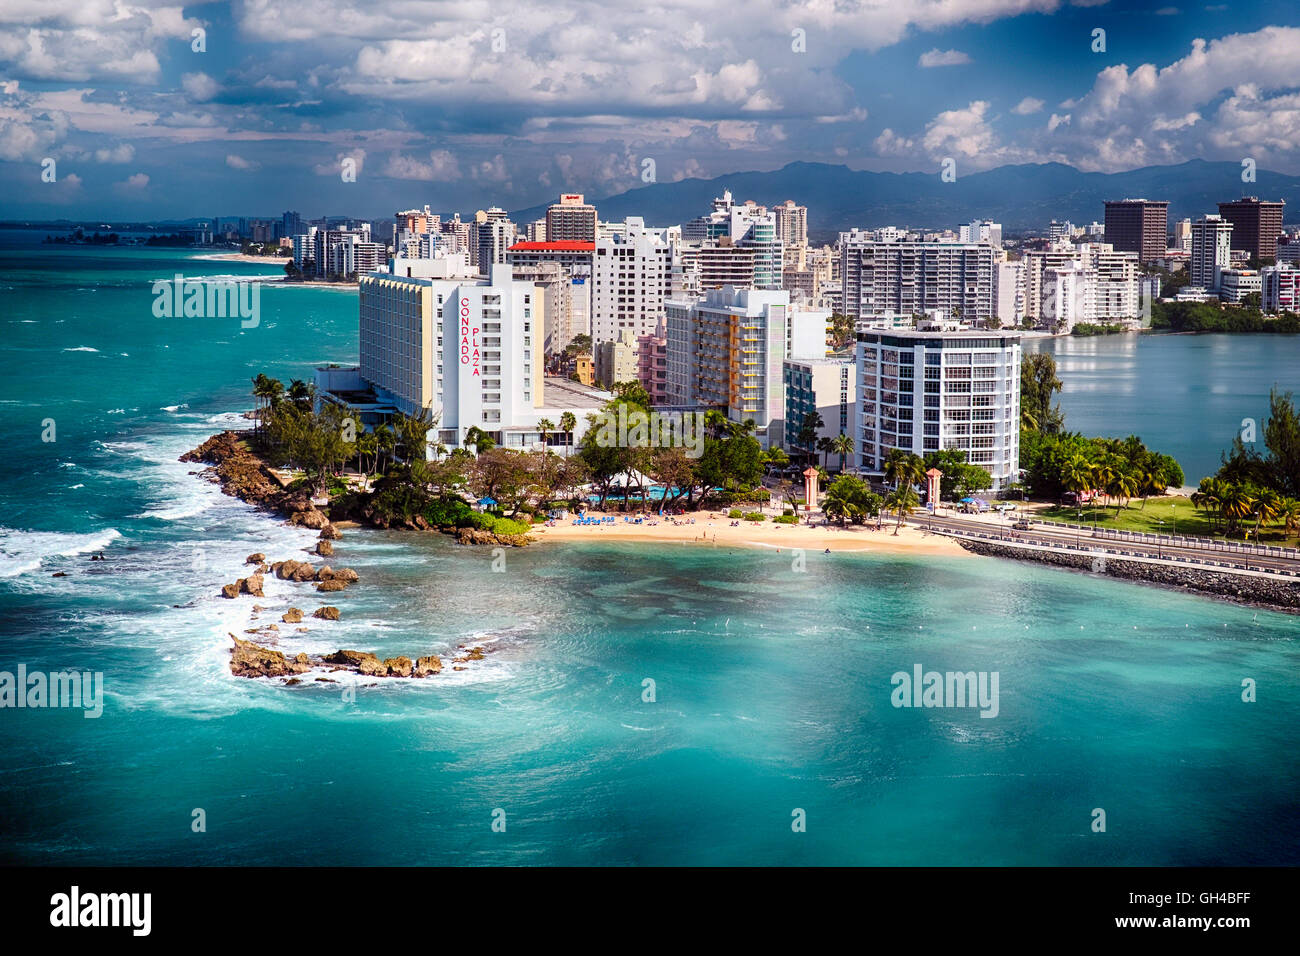 High Angle View of a Shoreline with Hotels and a Beach, Condado, San Juan, Puerto Rico Stock Photo